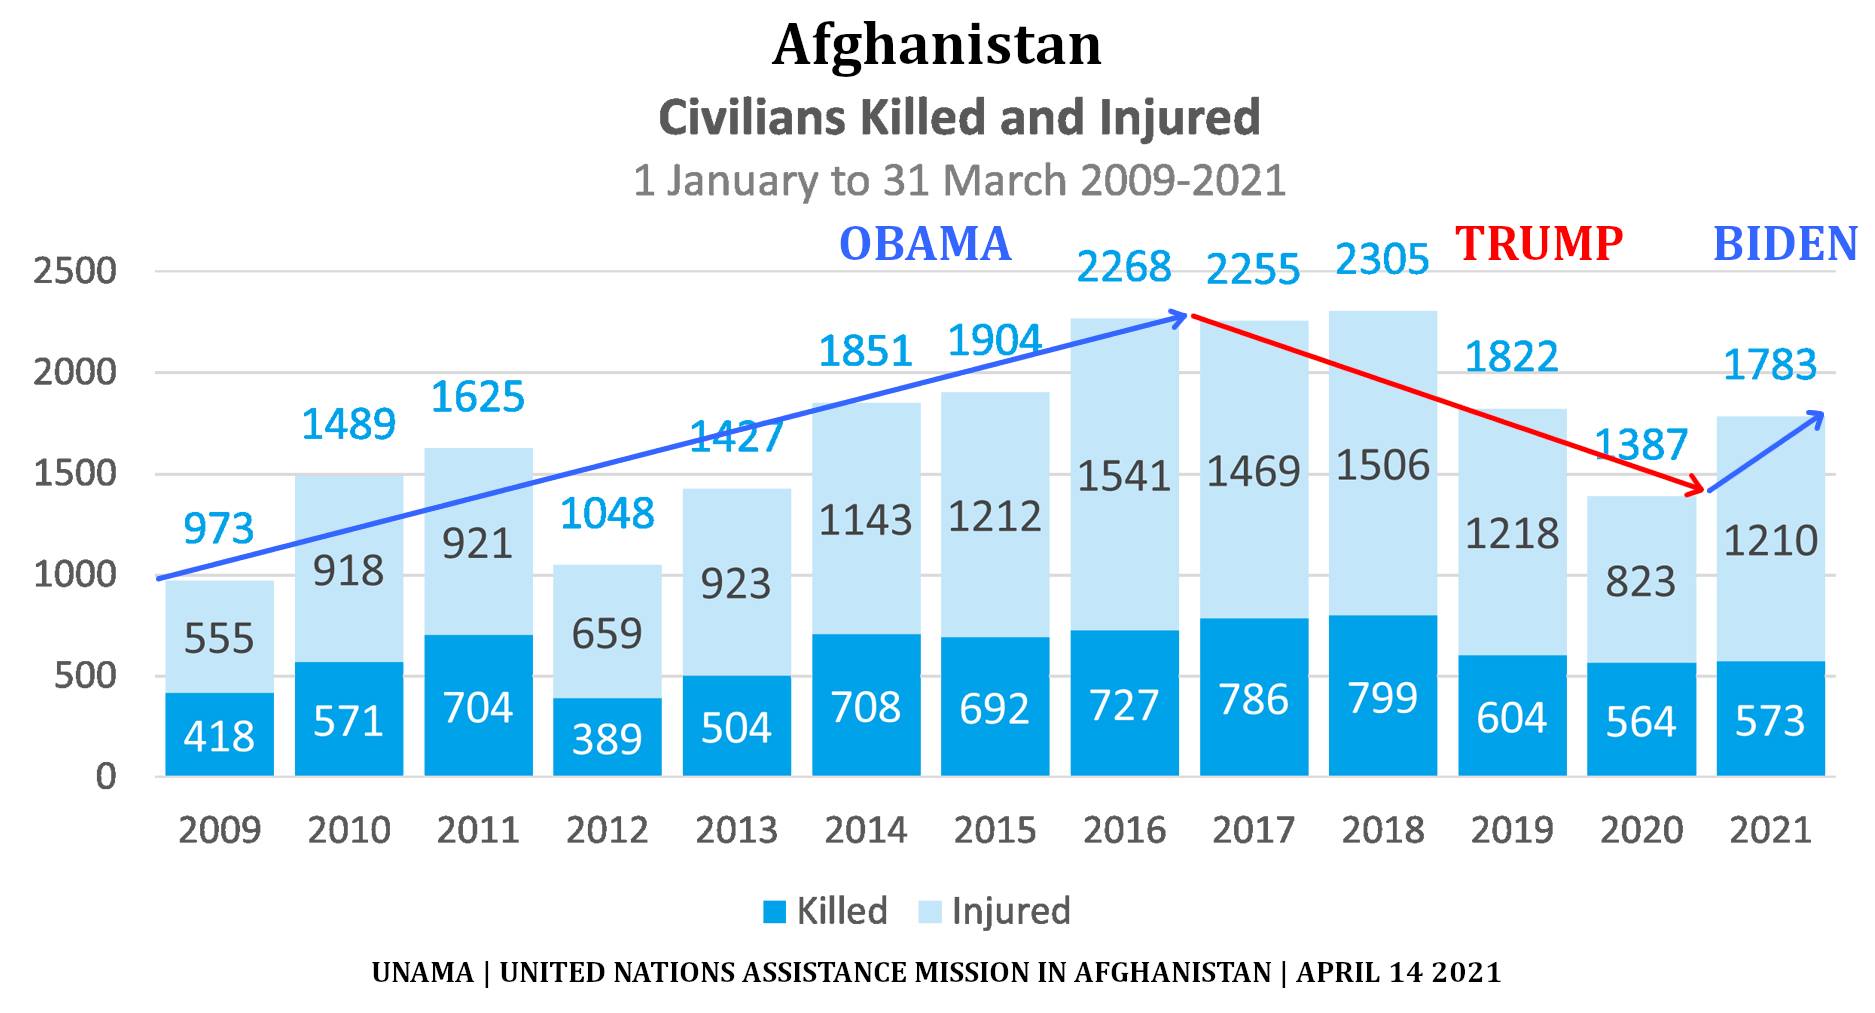 Civilians killed and injured in Afghanistan under Obama, Trump...